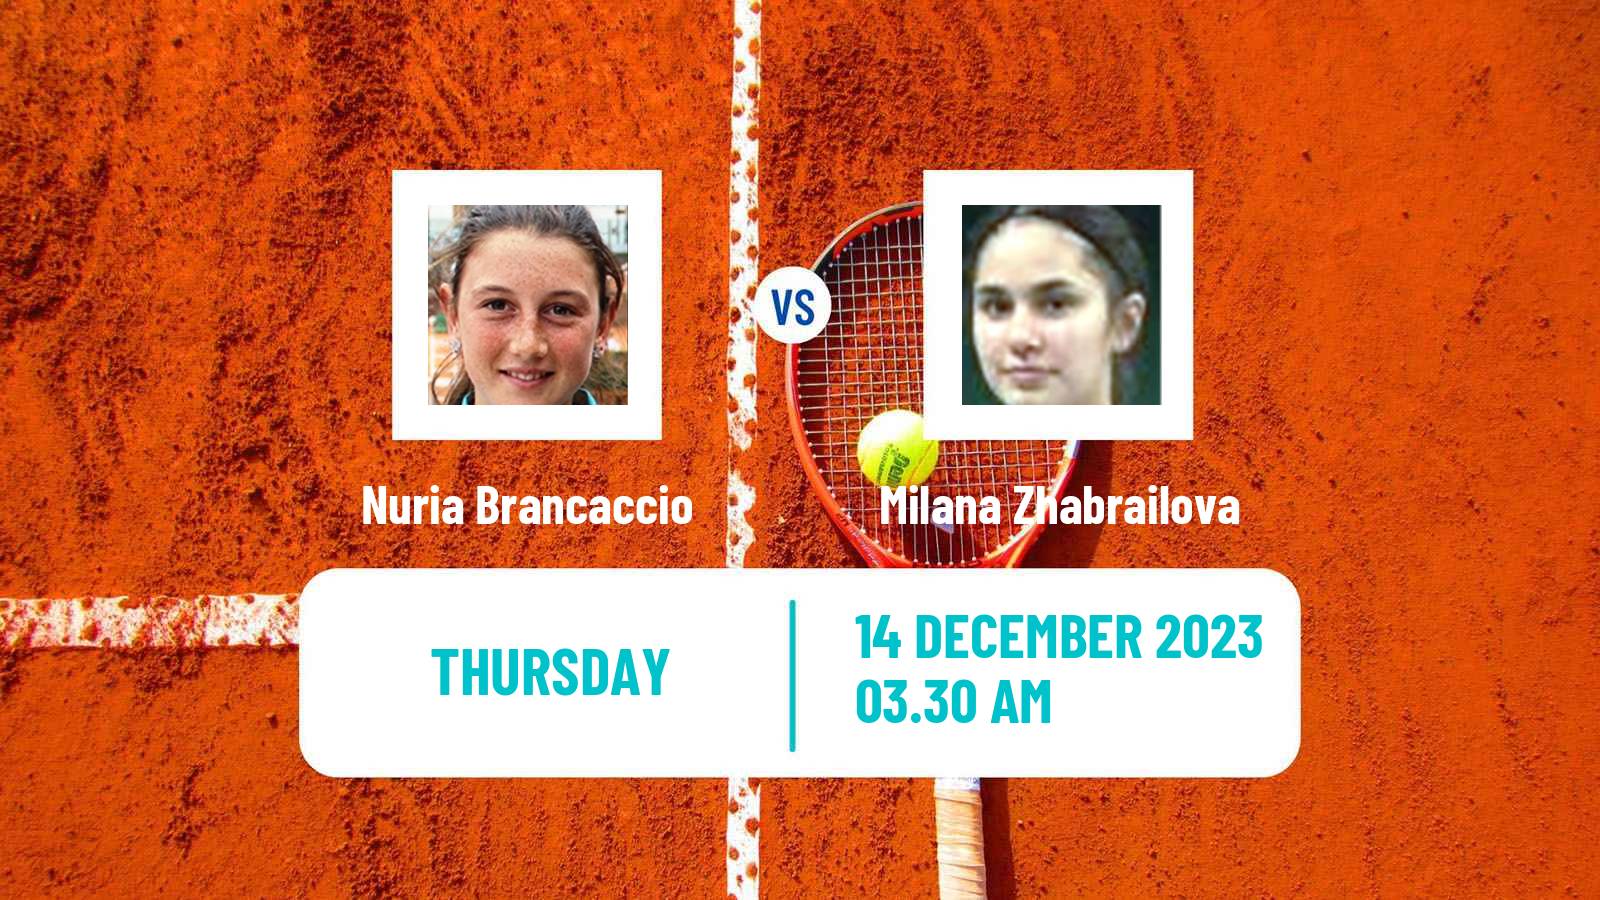 Tennis ITF W25 Monastir 6 Women Nuria Brancaccio - Milana Zhabrailova